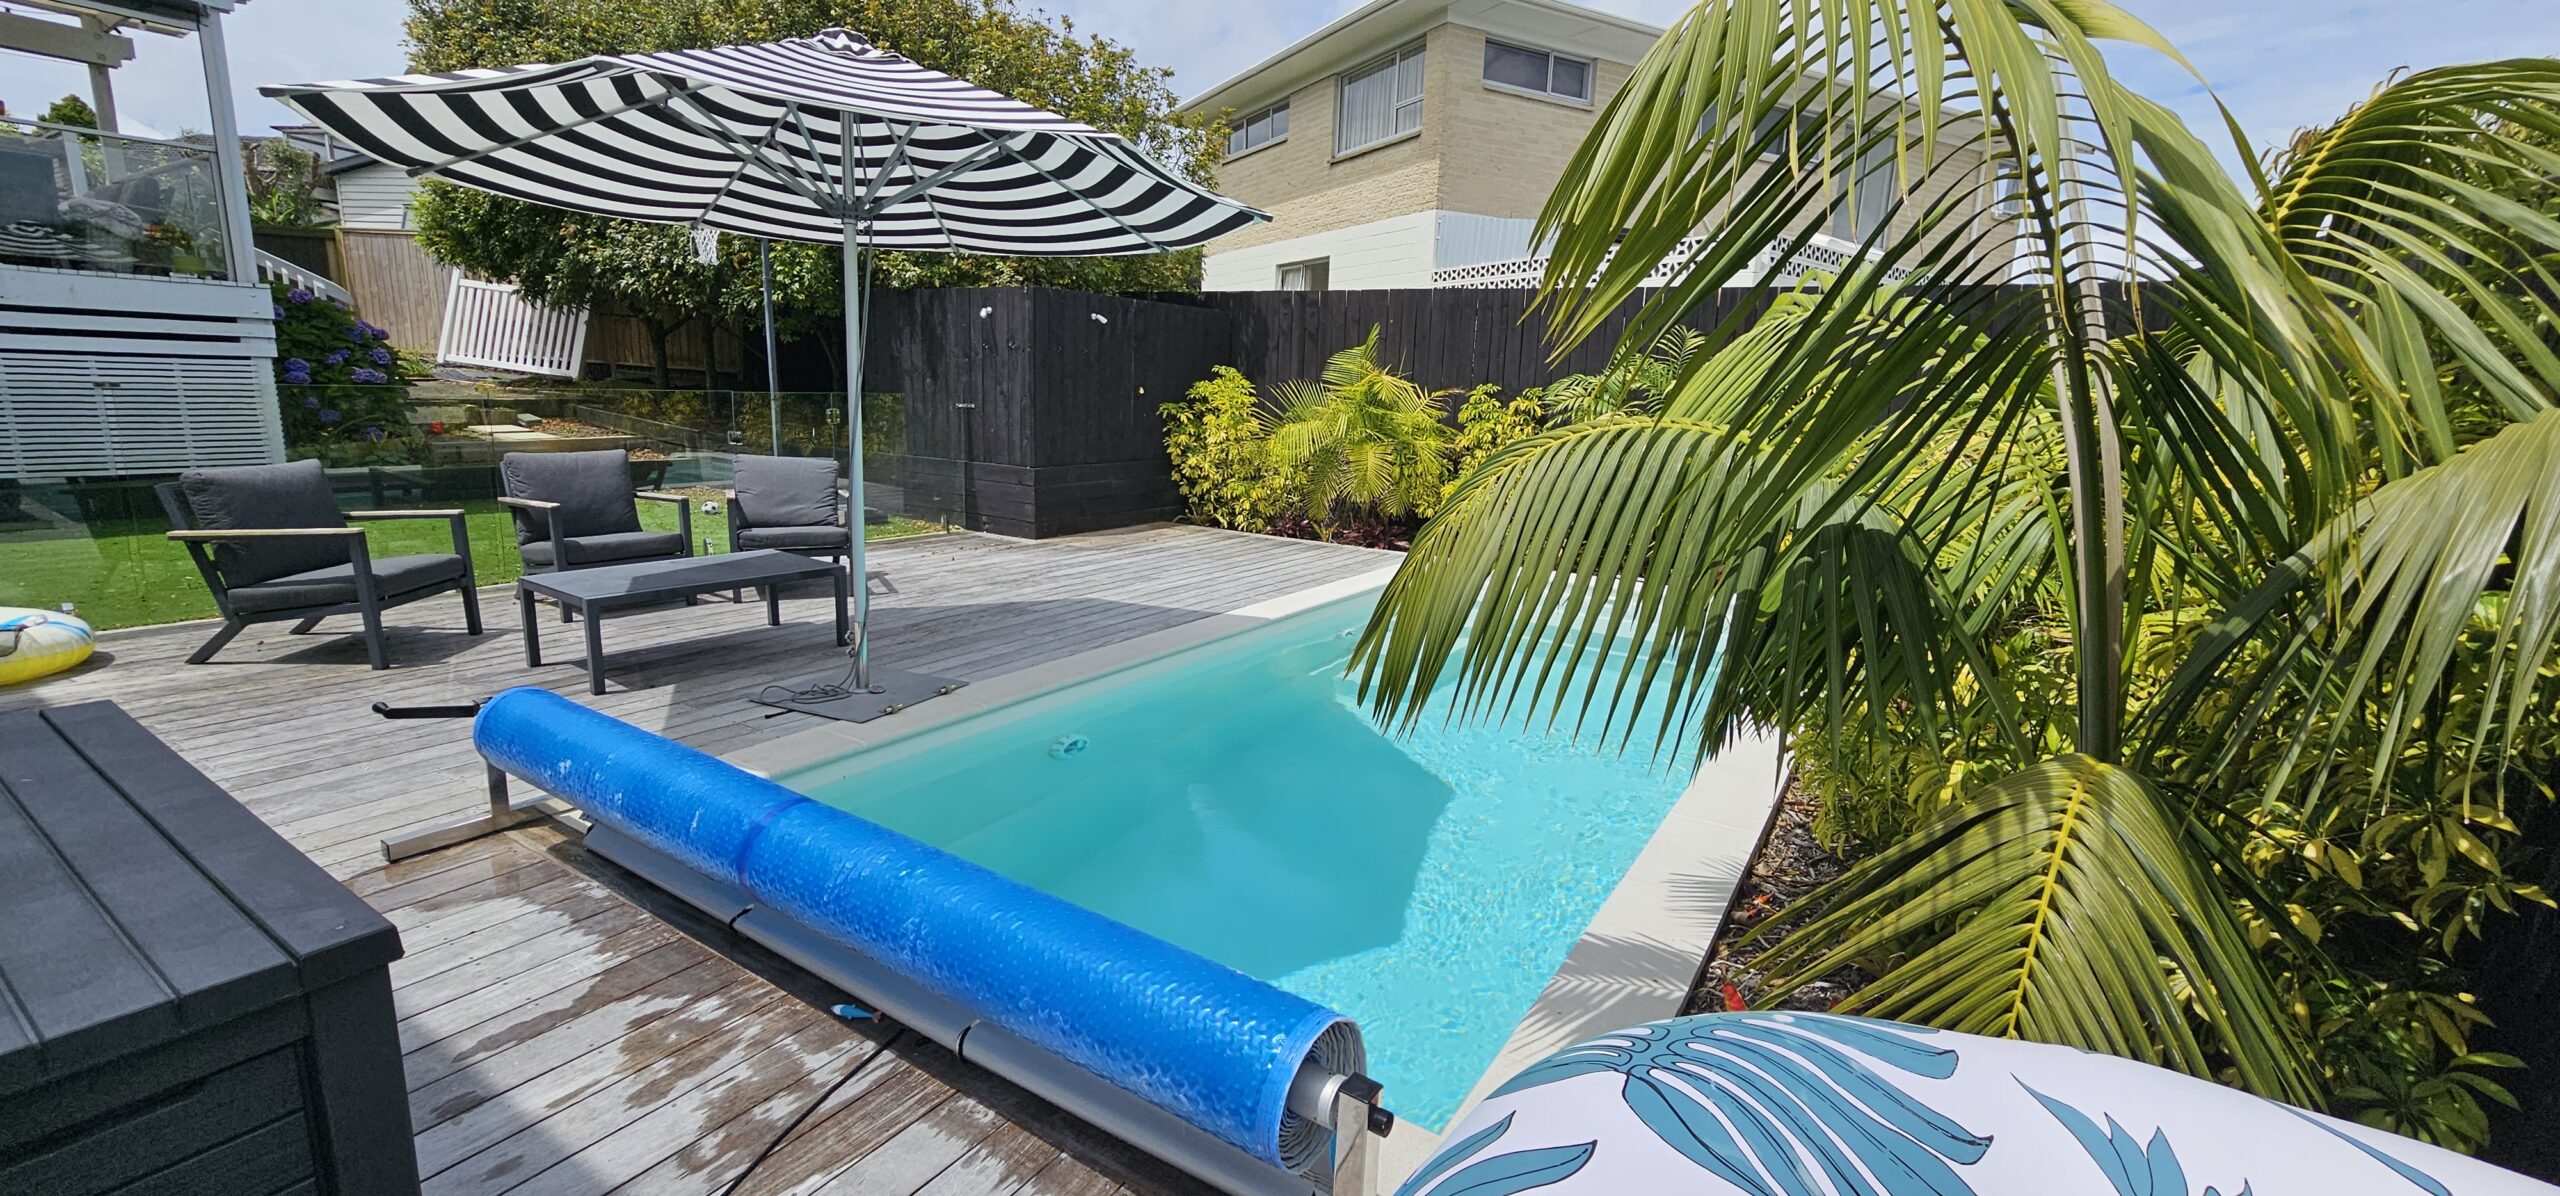 6.5 meter fibreglass swimming pool in the colour White